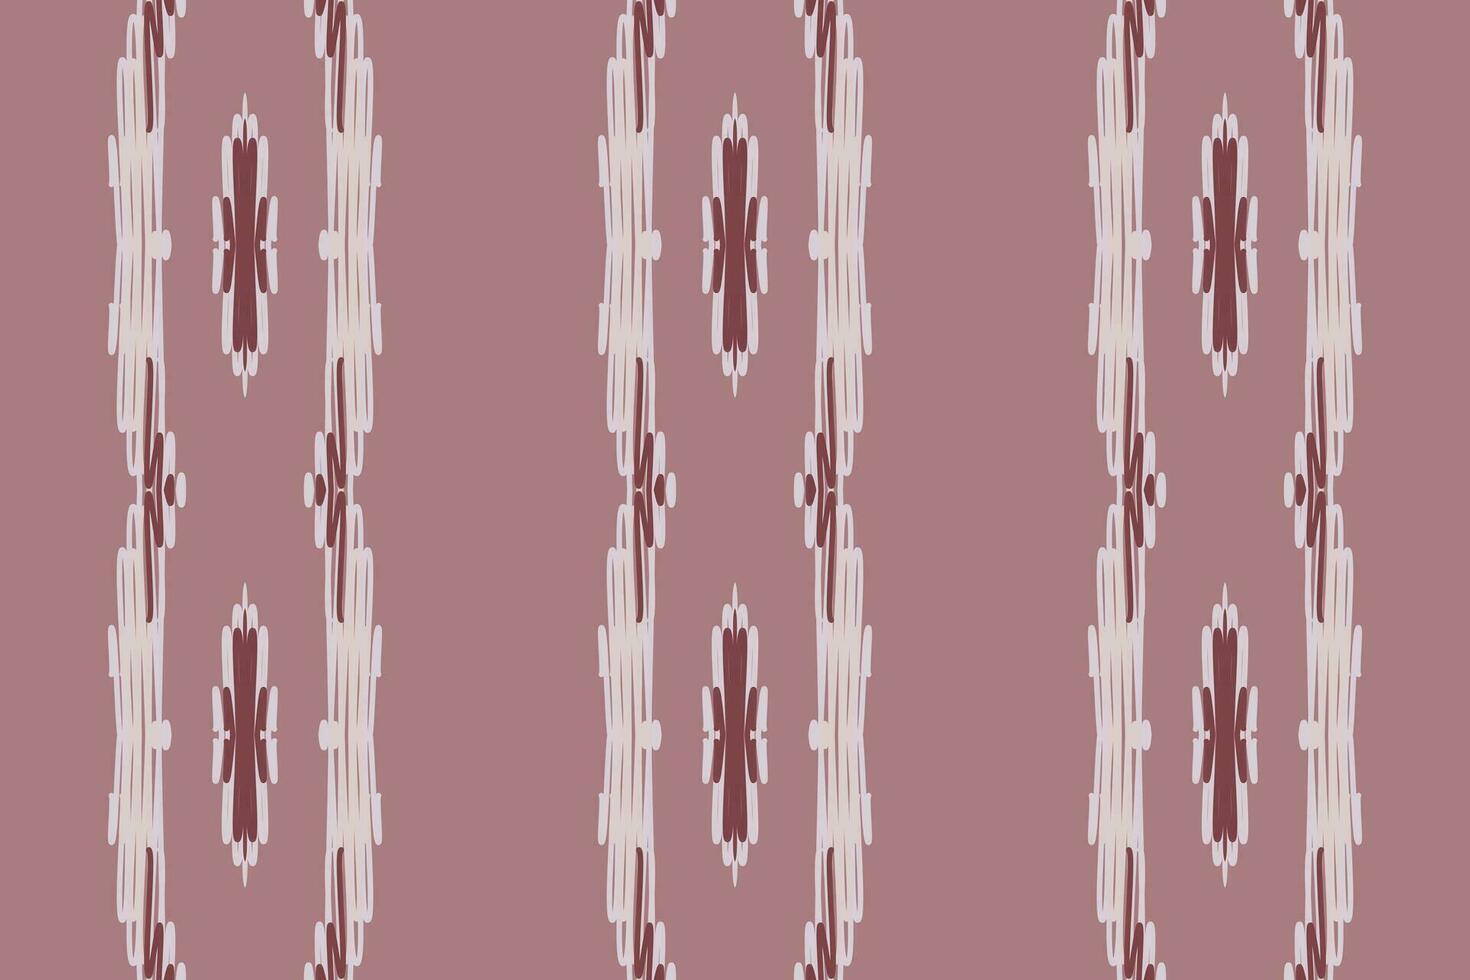 dupatta modelo sin costura pañuelo impresión seda motivo bordado, ikat bordado vector diseño para impresión 60s cachemir Corbata colorante Damasco ornamento alfombras hipster kurta pijama